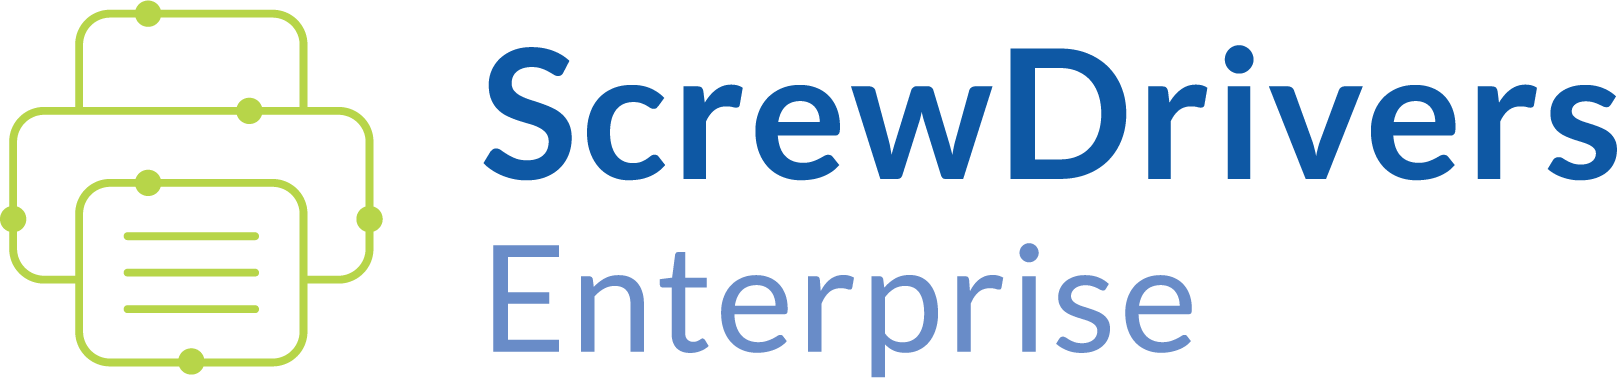 screwdrivers enterprise